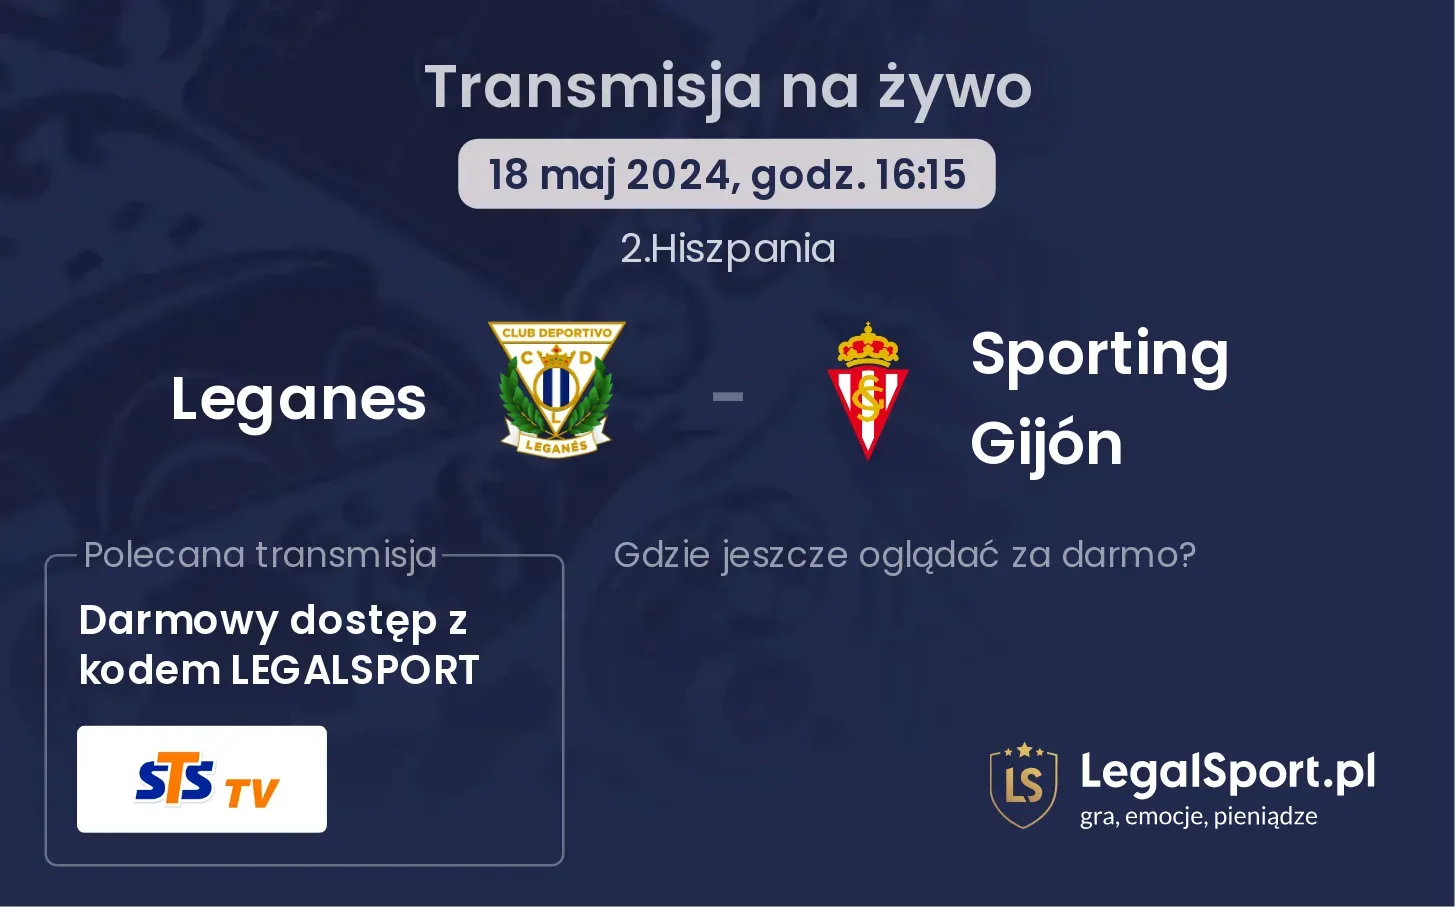 Leganes - Sporting Gijón